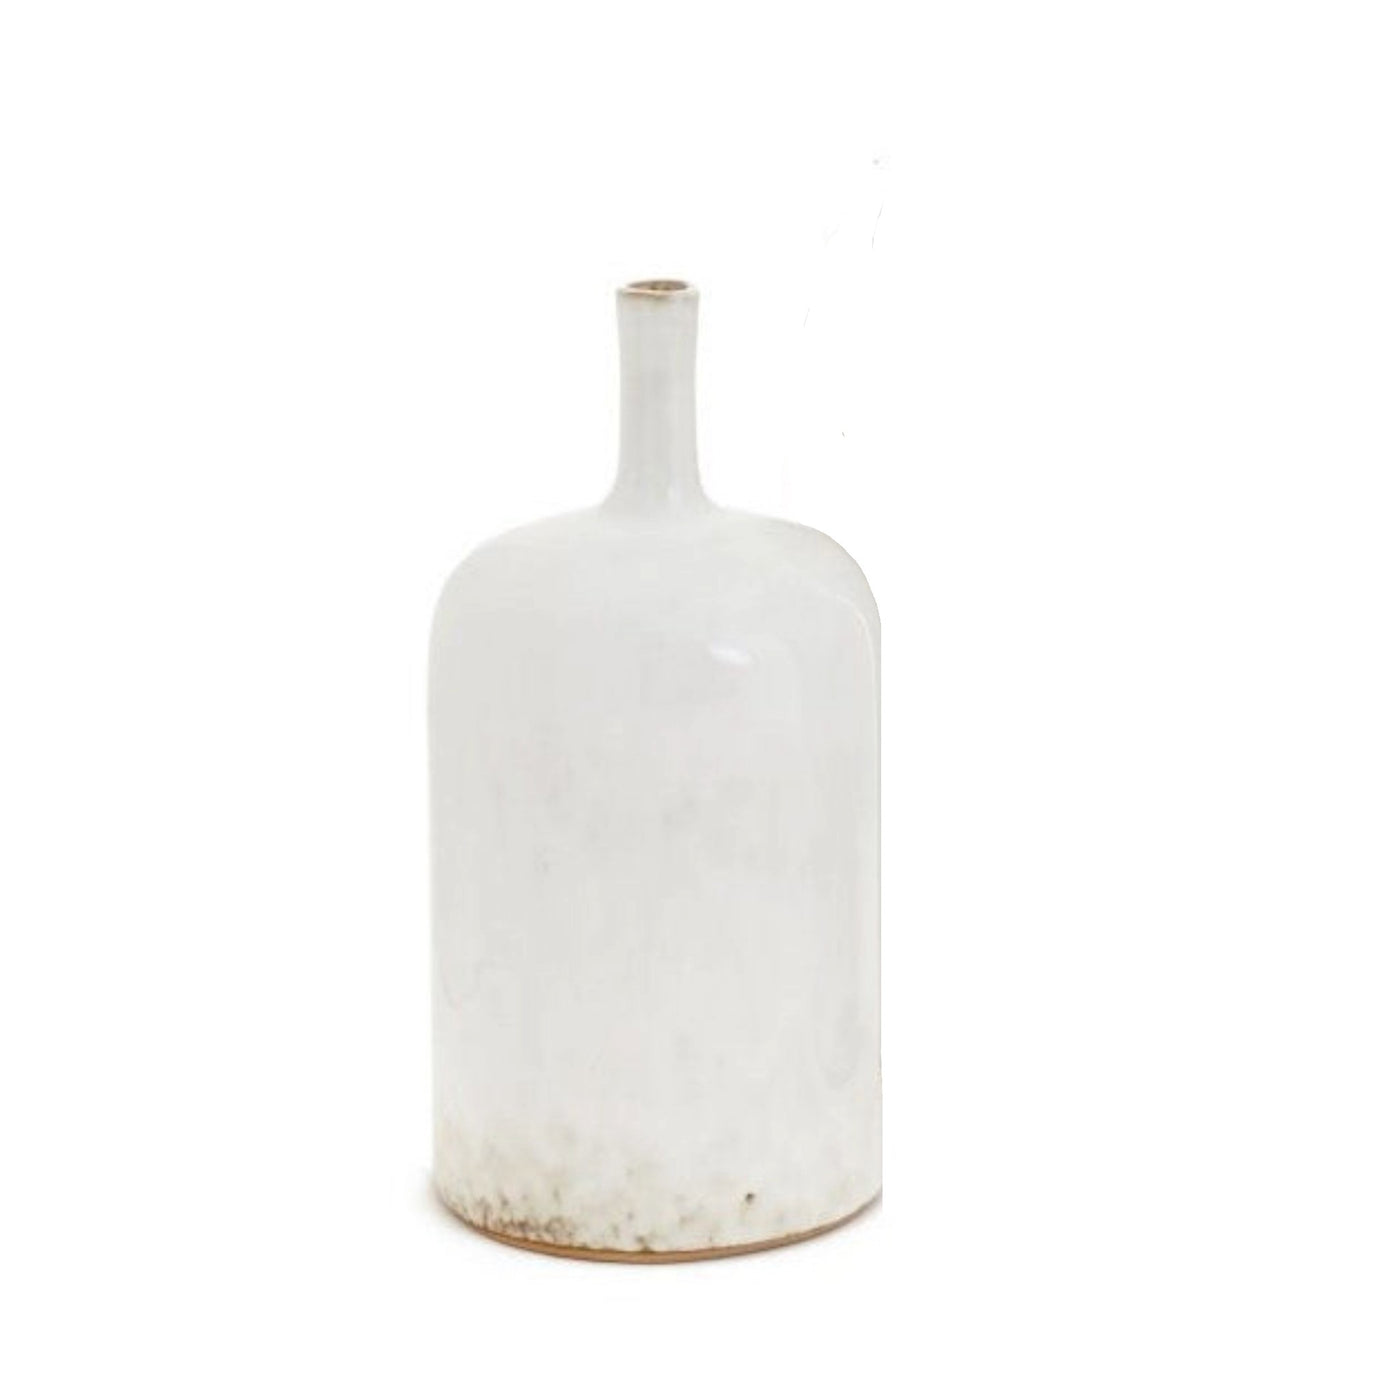 Bottleneck vases - off-White stoneware with a bit of terracotta color on edges: Medium #8360054